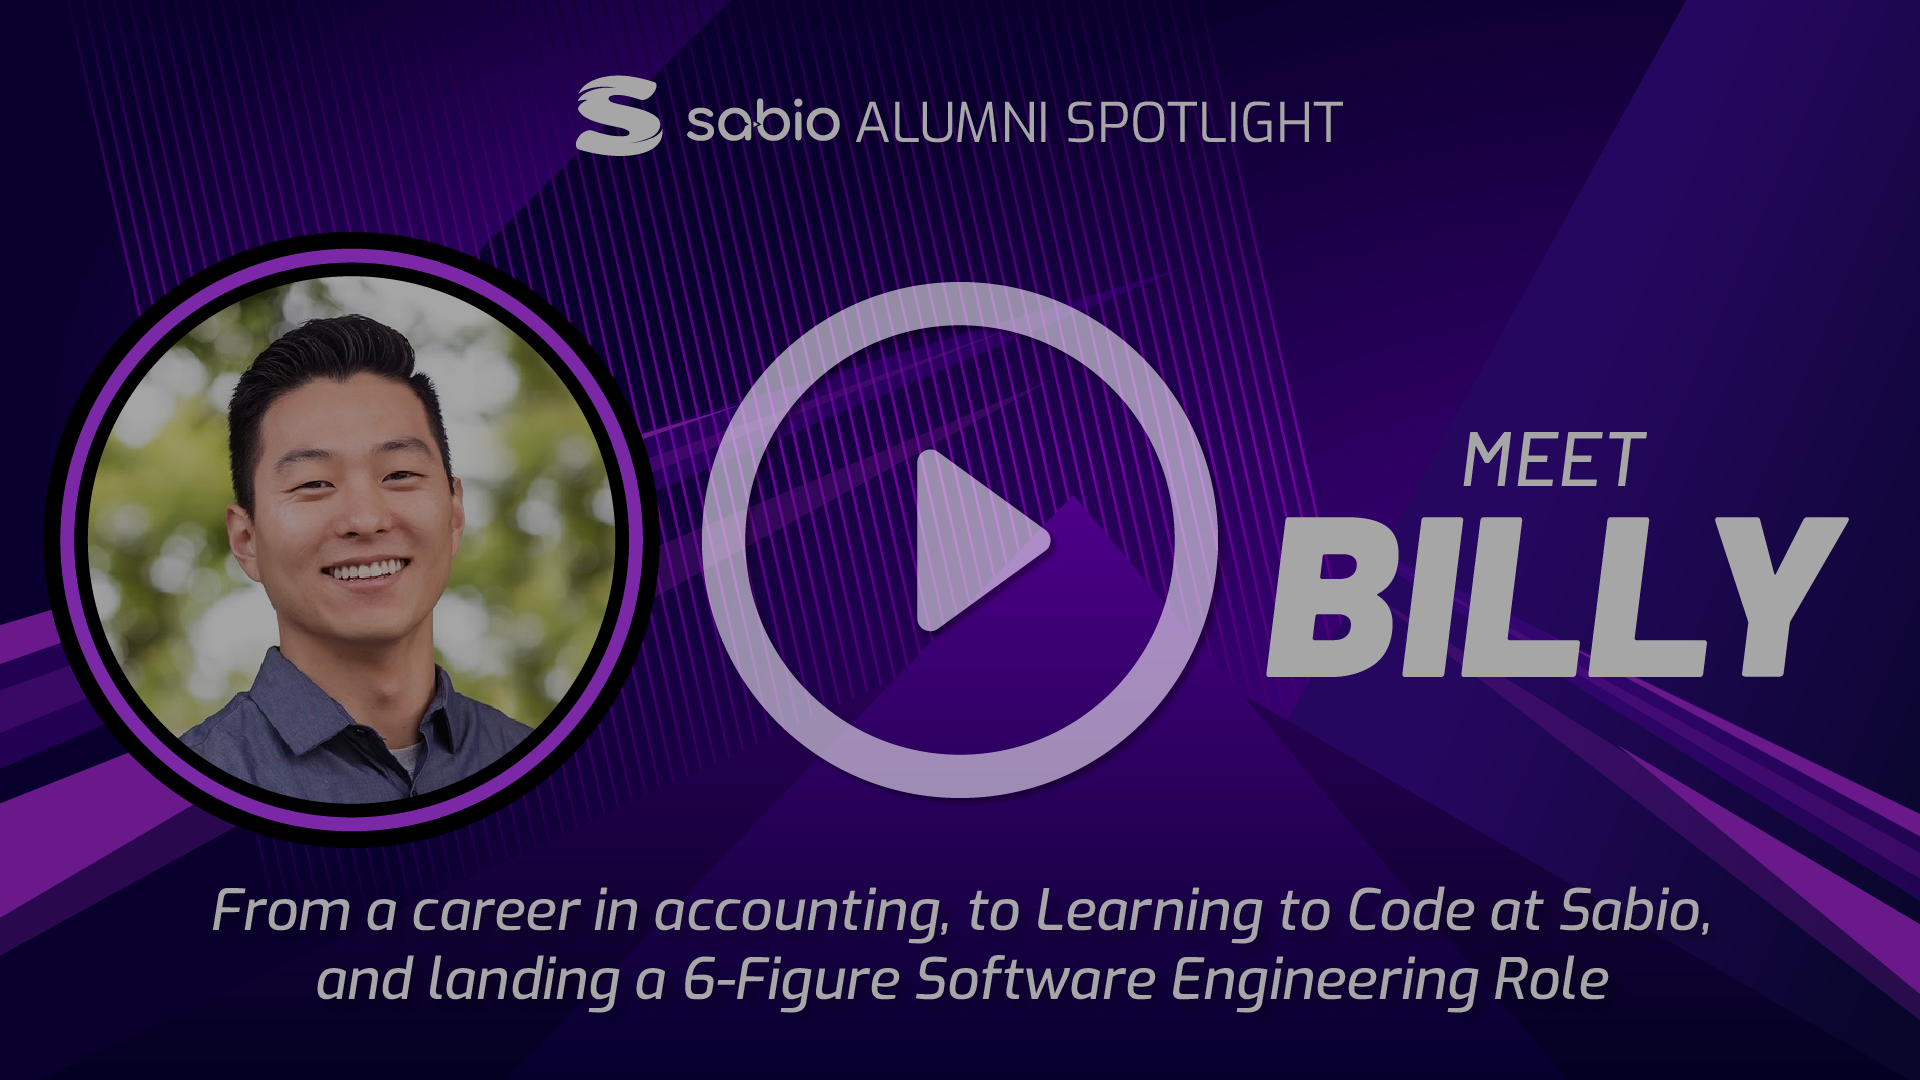 Sabio Alumni Spotlight: Billy. Play symbol overlaid to the image.